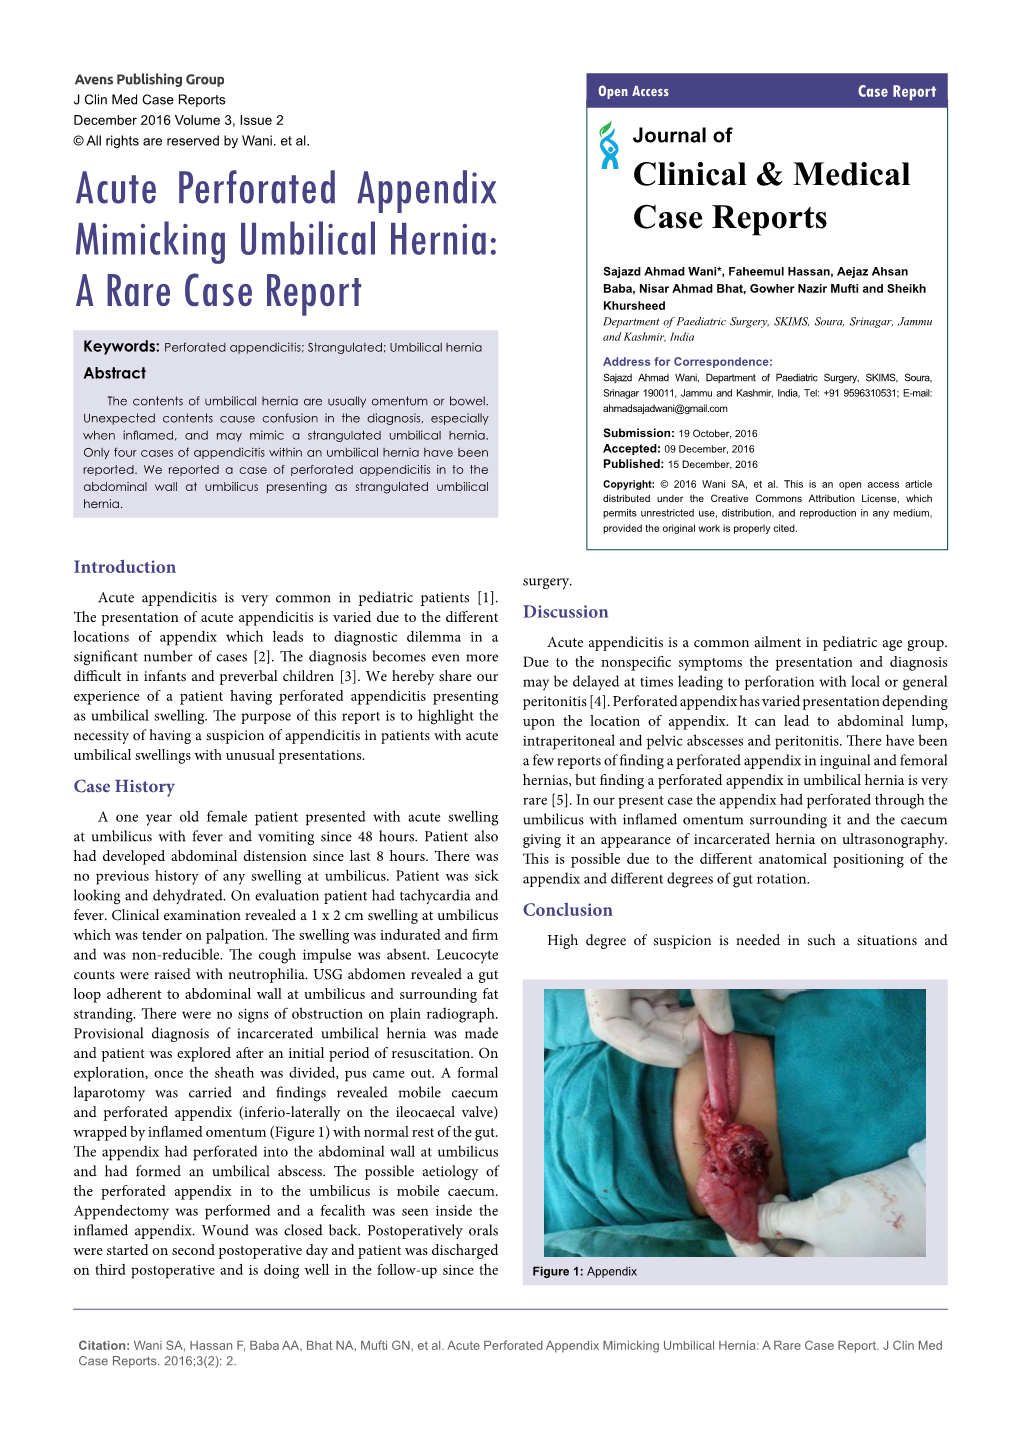 Acute Perforated Appendix Mimicking Umbilical Hernia: a Rare Case Report